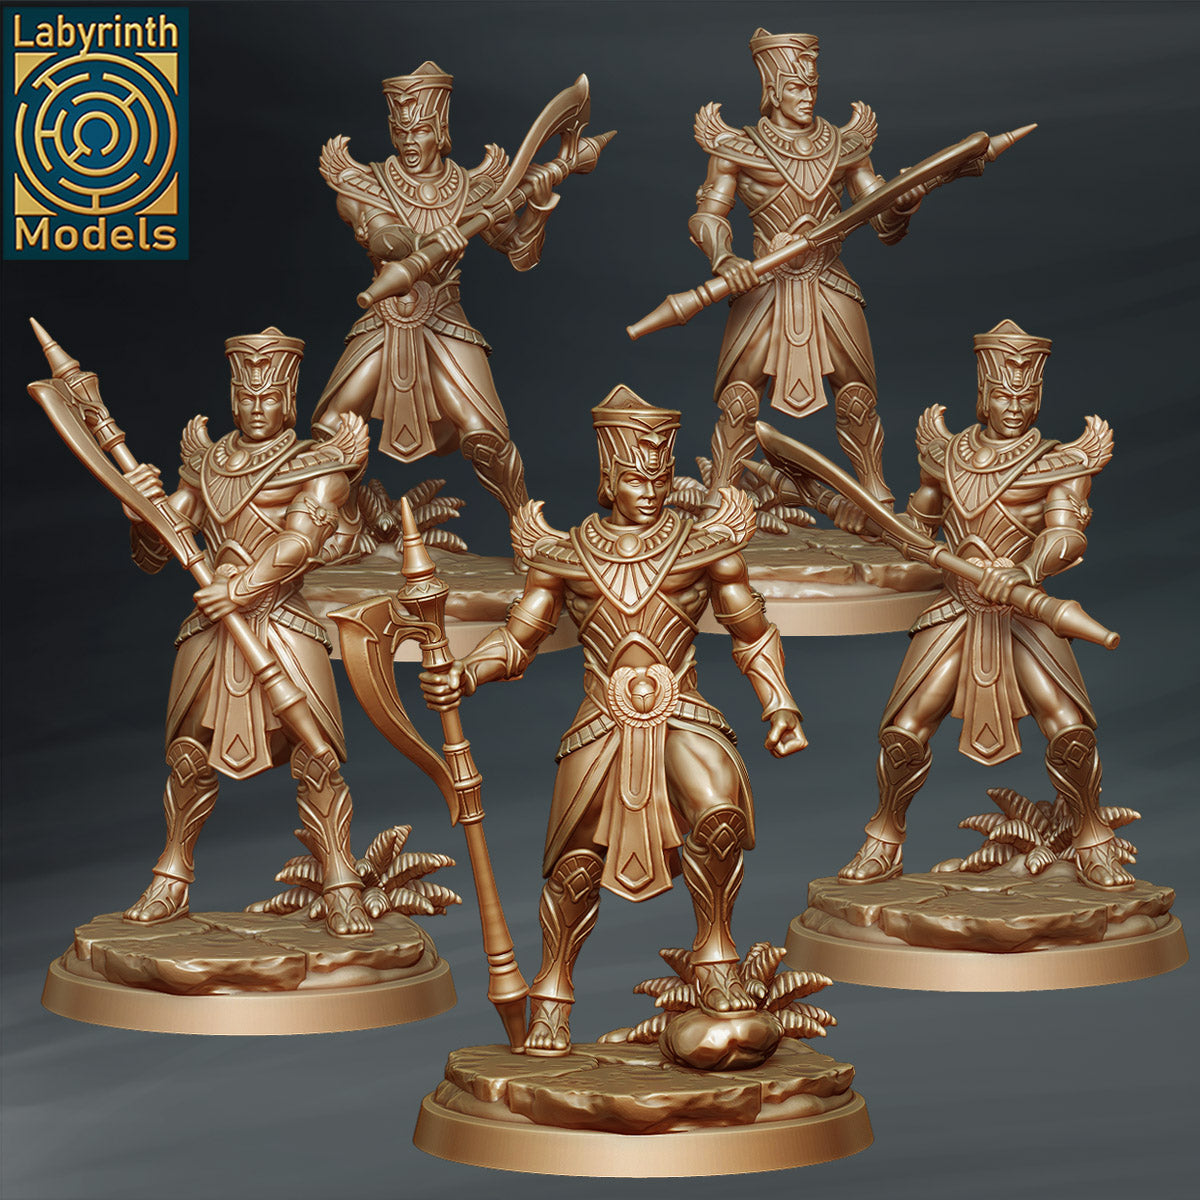 Dynasty Guards by Labyrinth Models